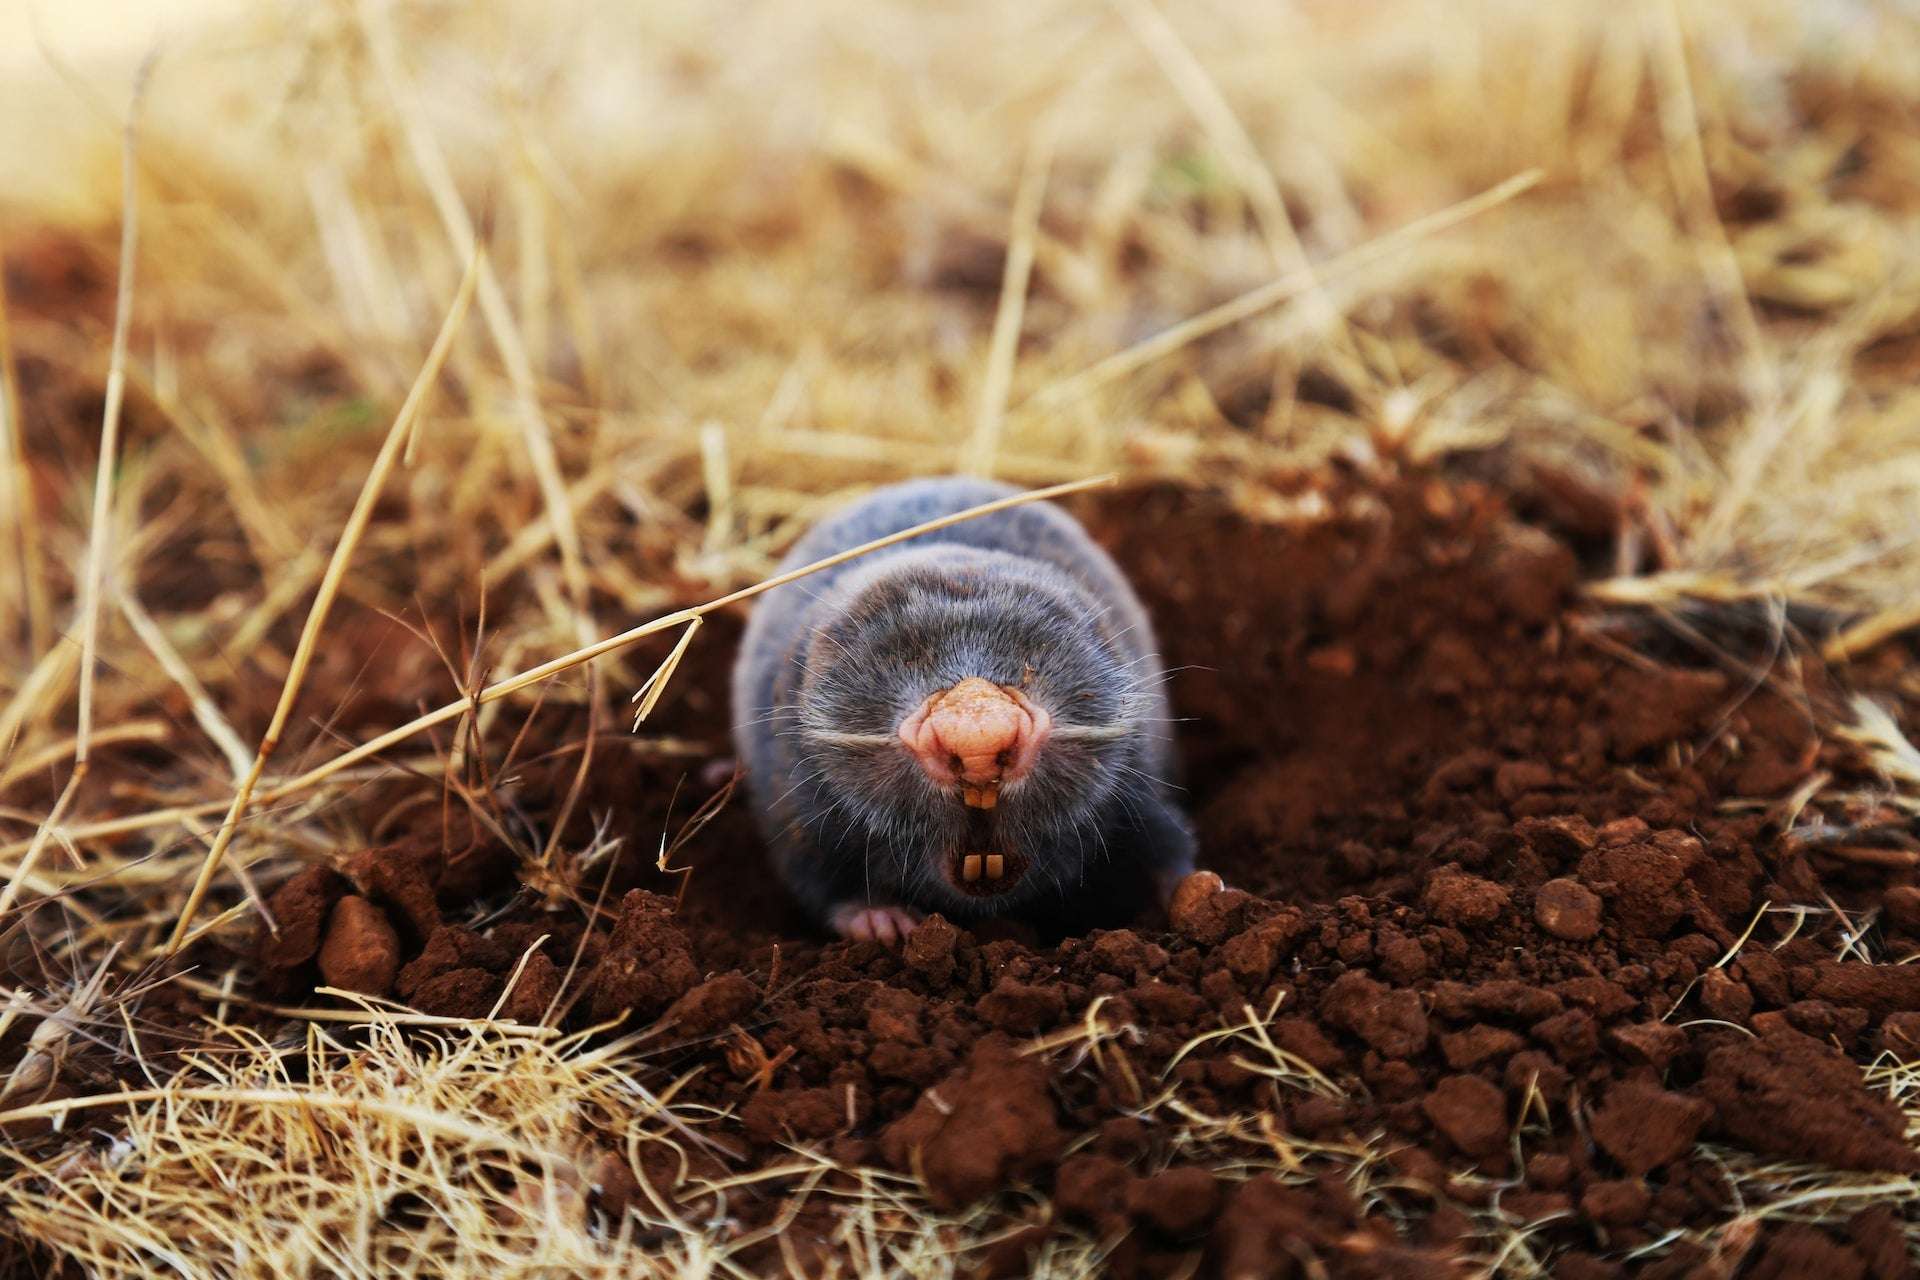 Mole burrowing a hole